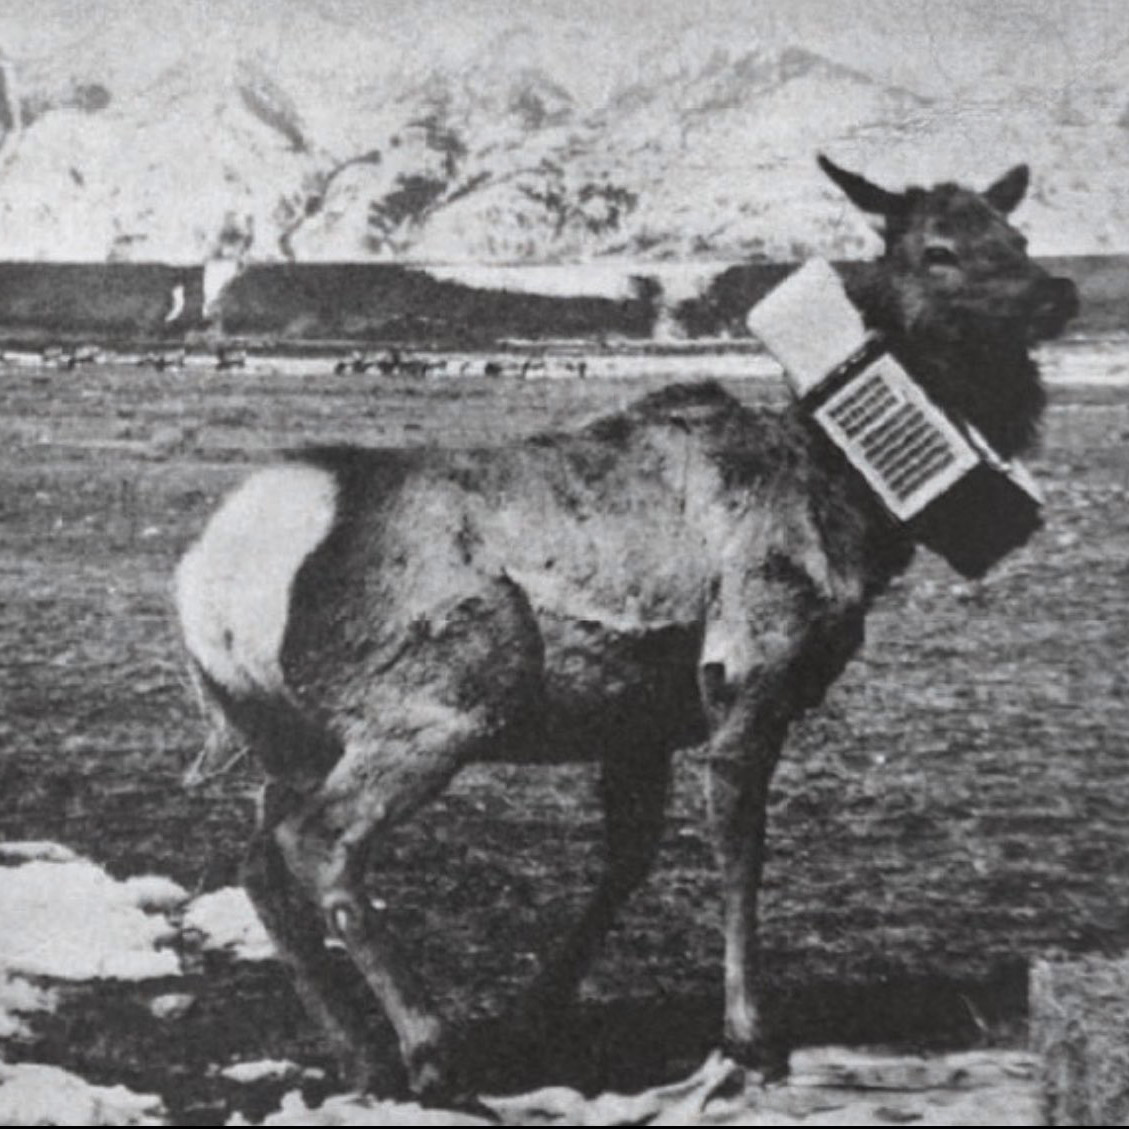 Monique the Elk with a transmitter collar around her neck